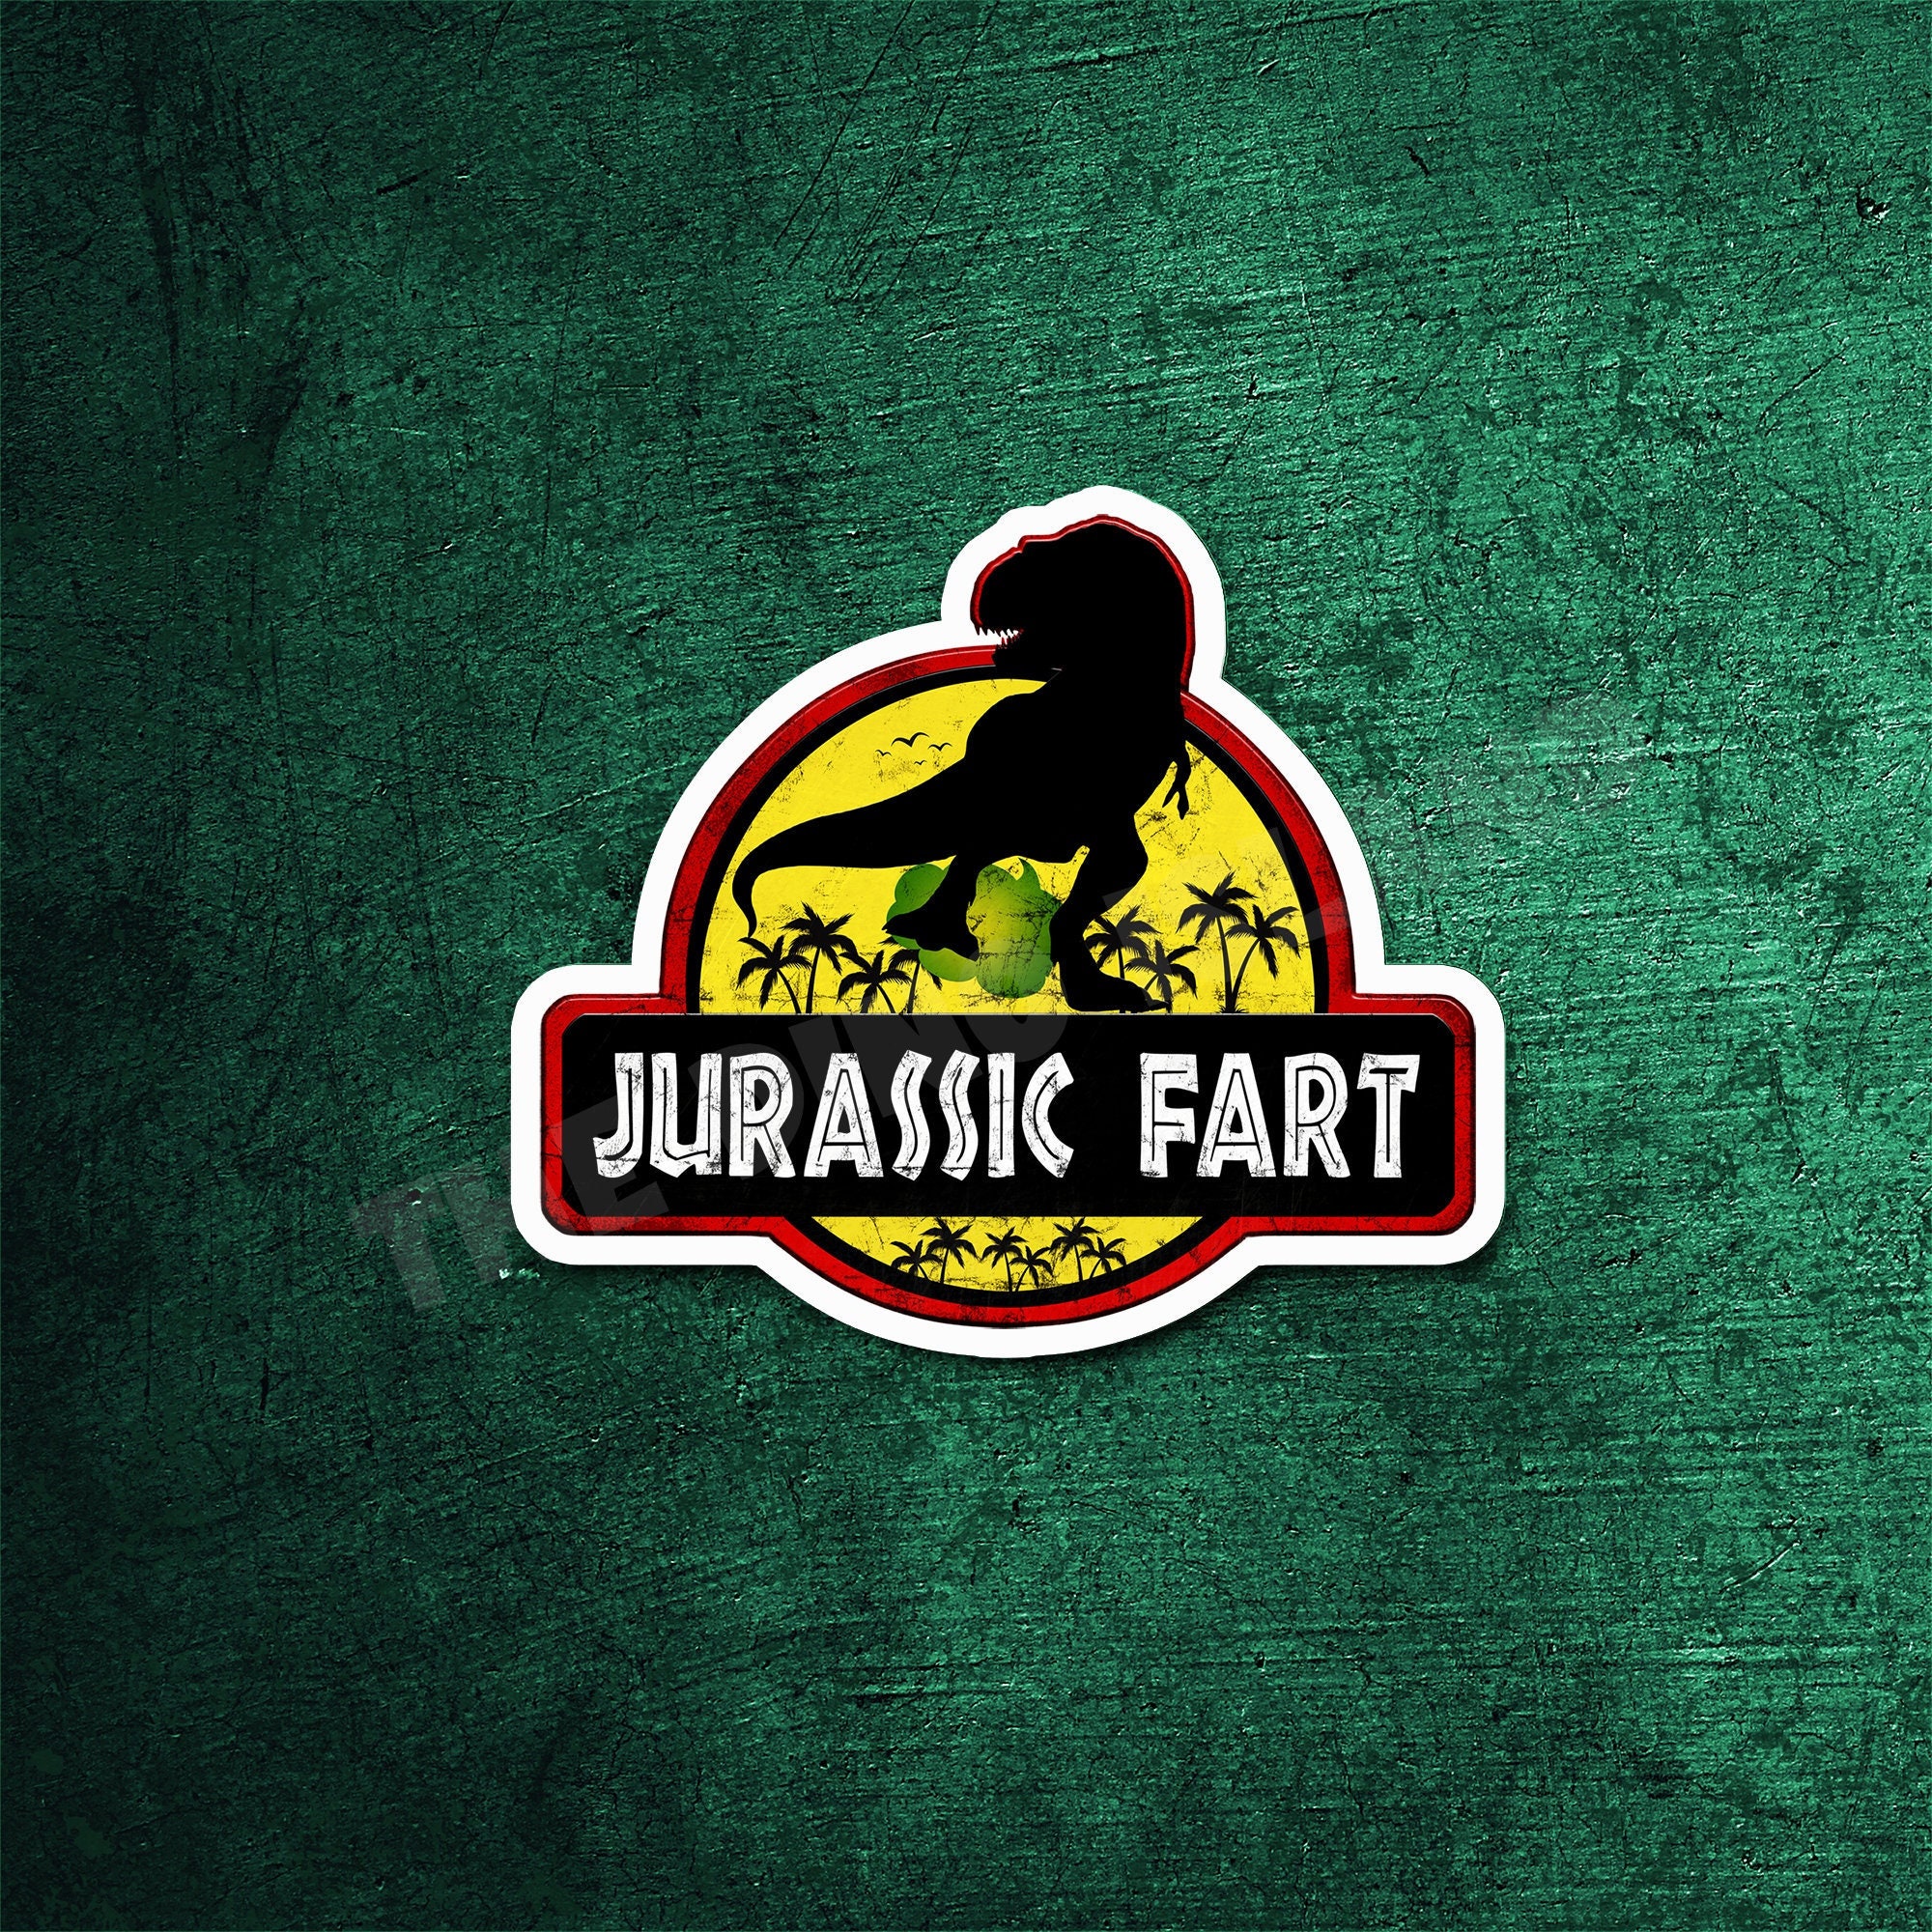 Jurassic Fart 2022 12 29 Clip